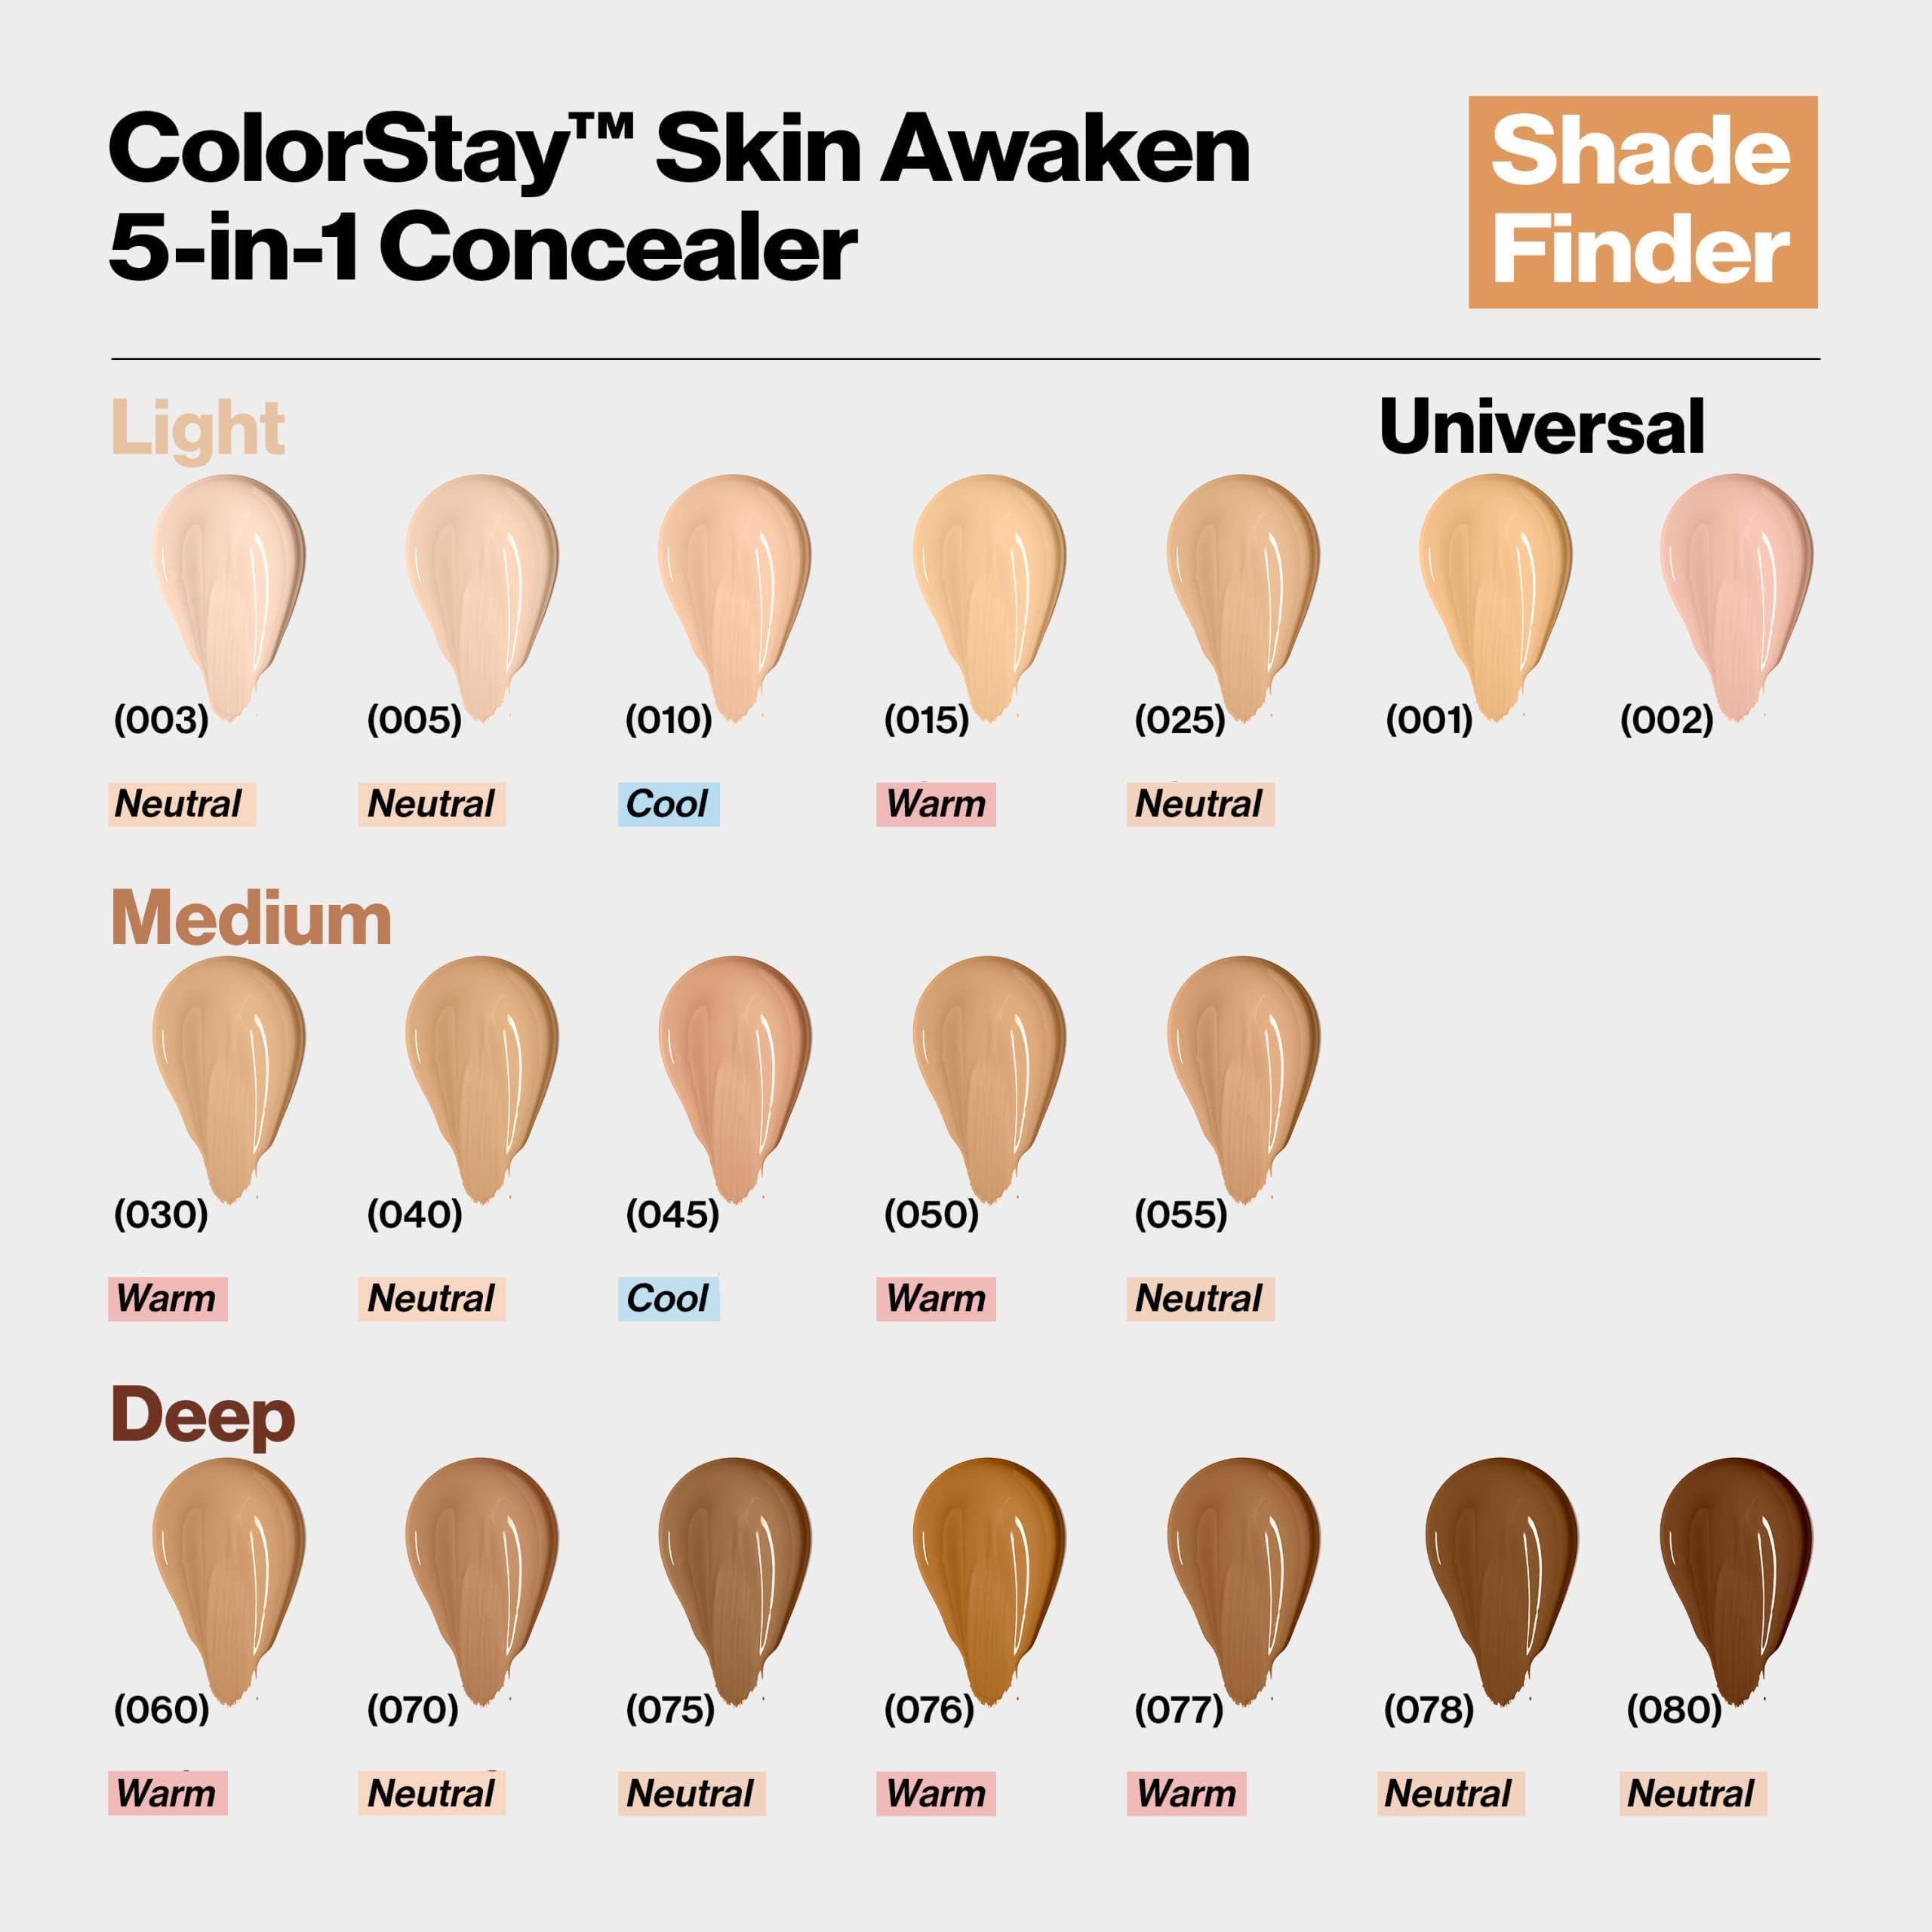 Revlon ColorStay Skin Awaken 5-in-1 Concealer, Lightweight, Creamy Longlasting Face Makeup with Caffeine & Vitamin C, For Imperfections, Dark Circles & Redness, 005 Fair, 0.27 fl oz